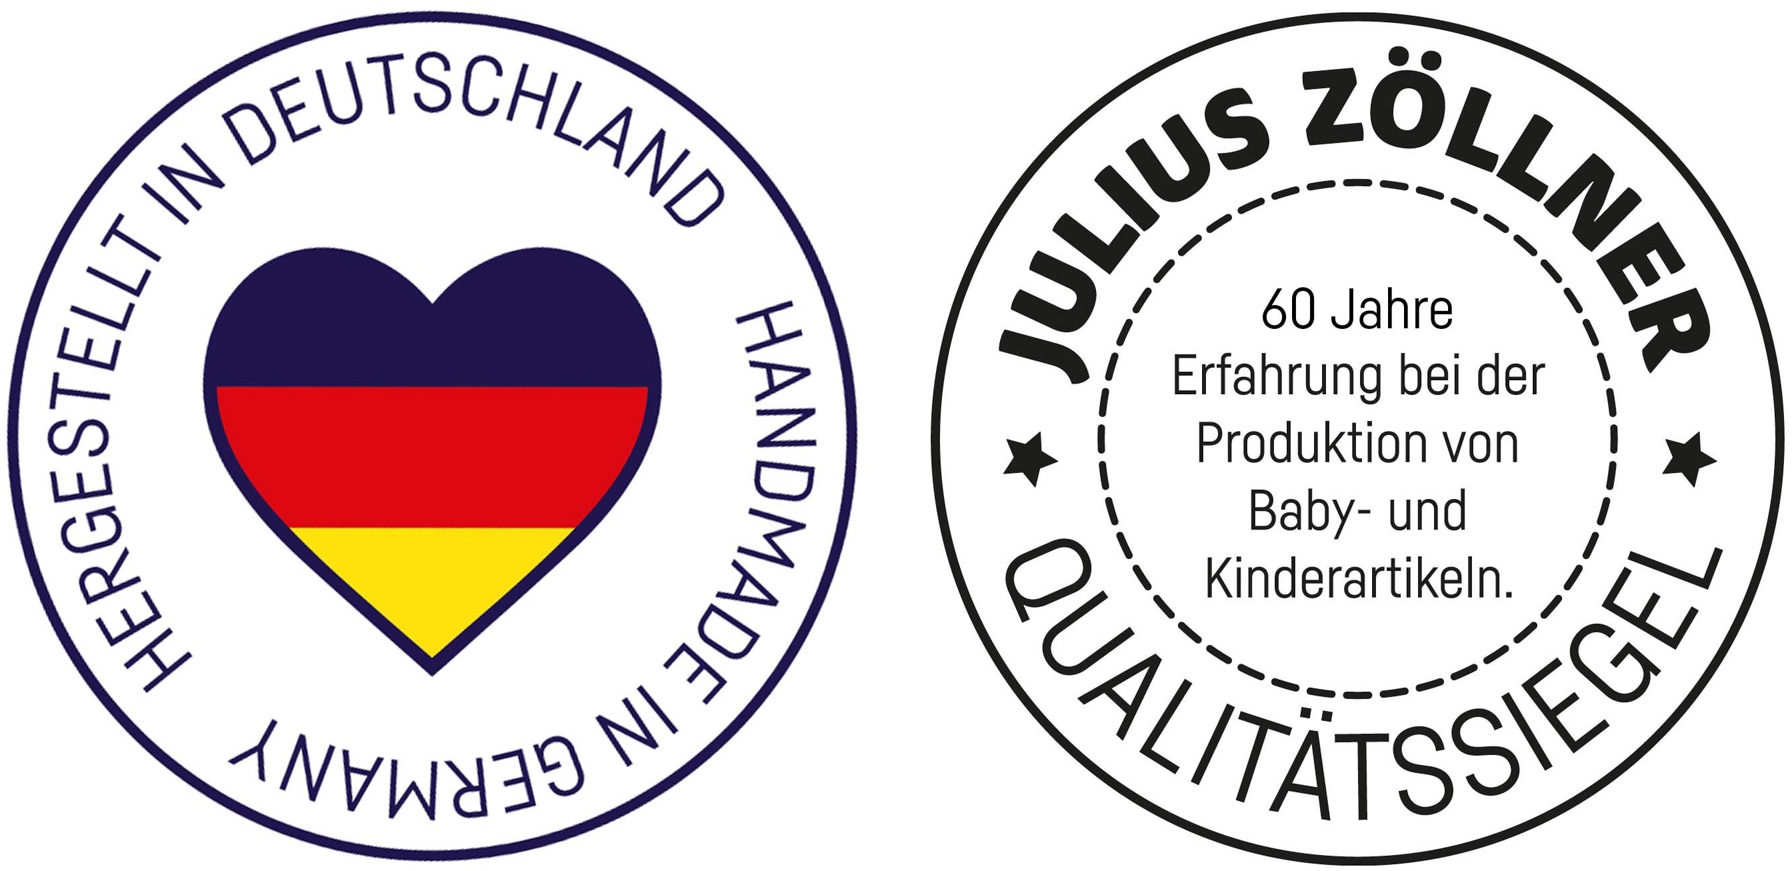 Julius Zöllner Krabbeldecke »Musselin, nougat«, Made in Germany